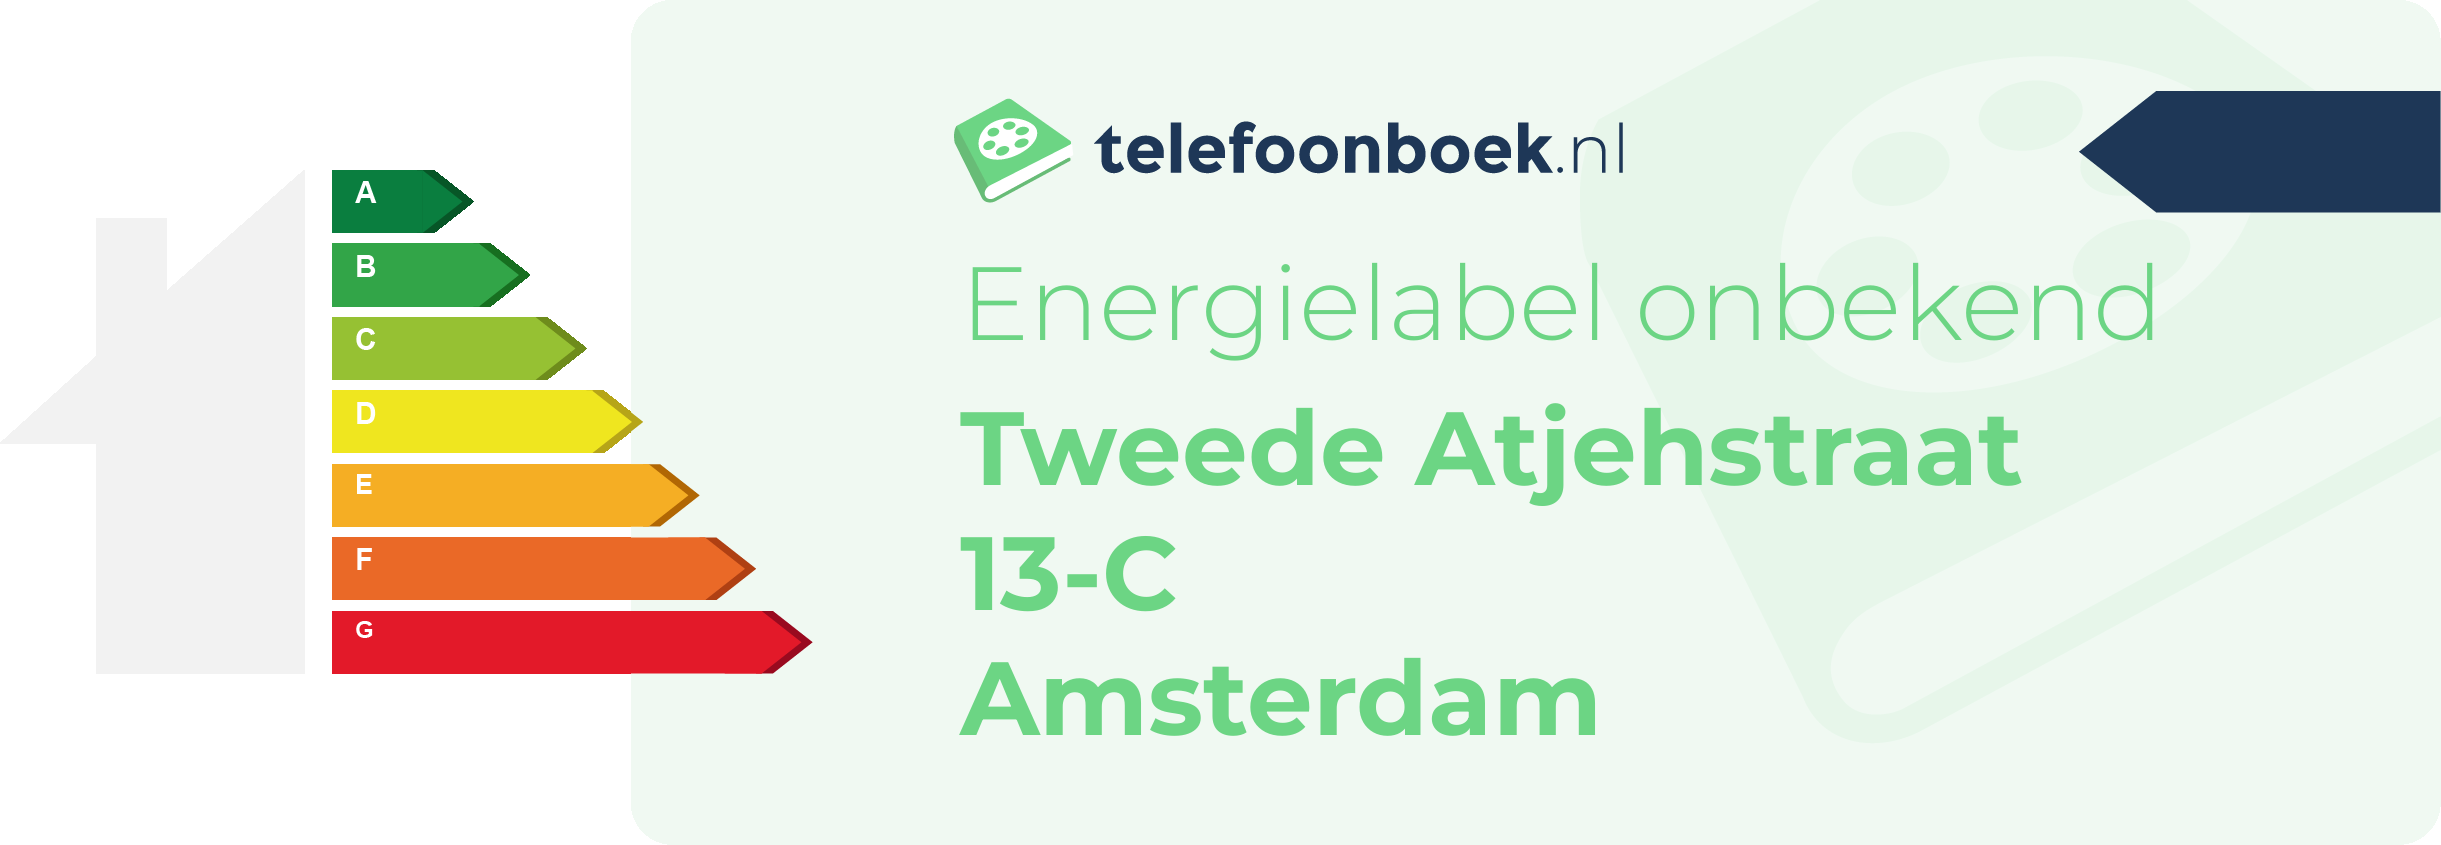 Energielabel Tweede Atjehstraat 13-C Amsterdam